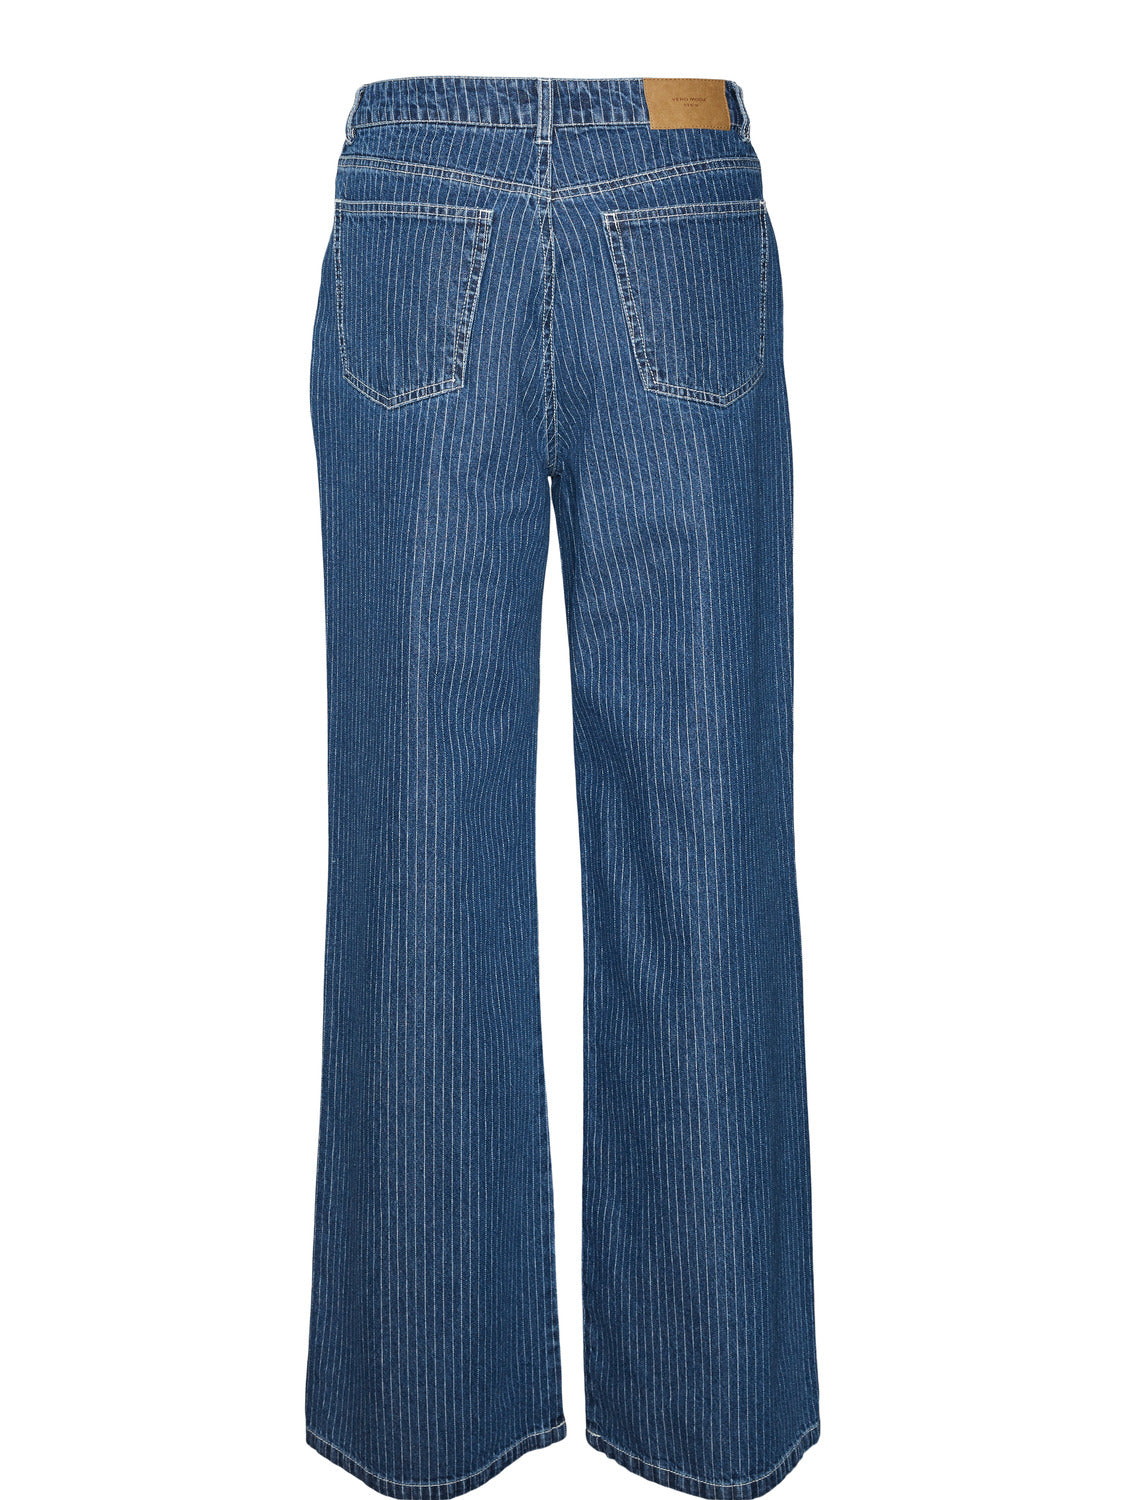 VMKATHY Jeans - Medium Blue Denim